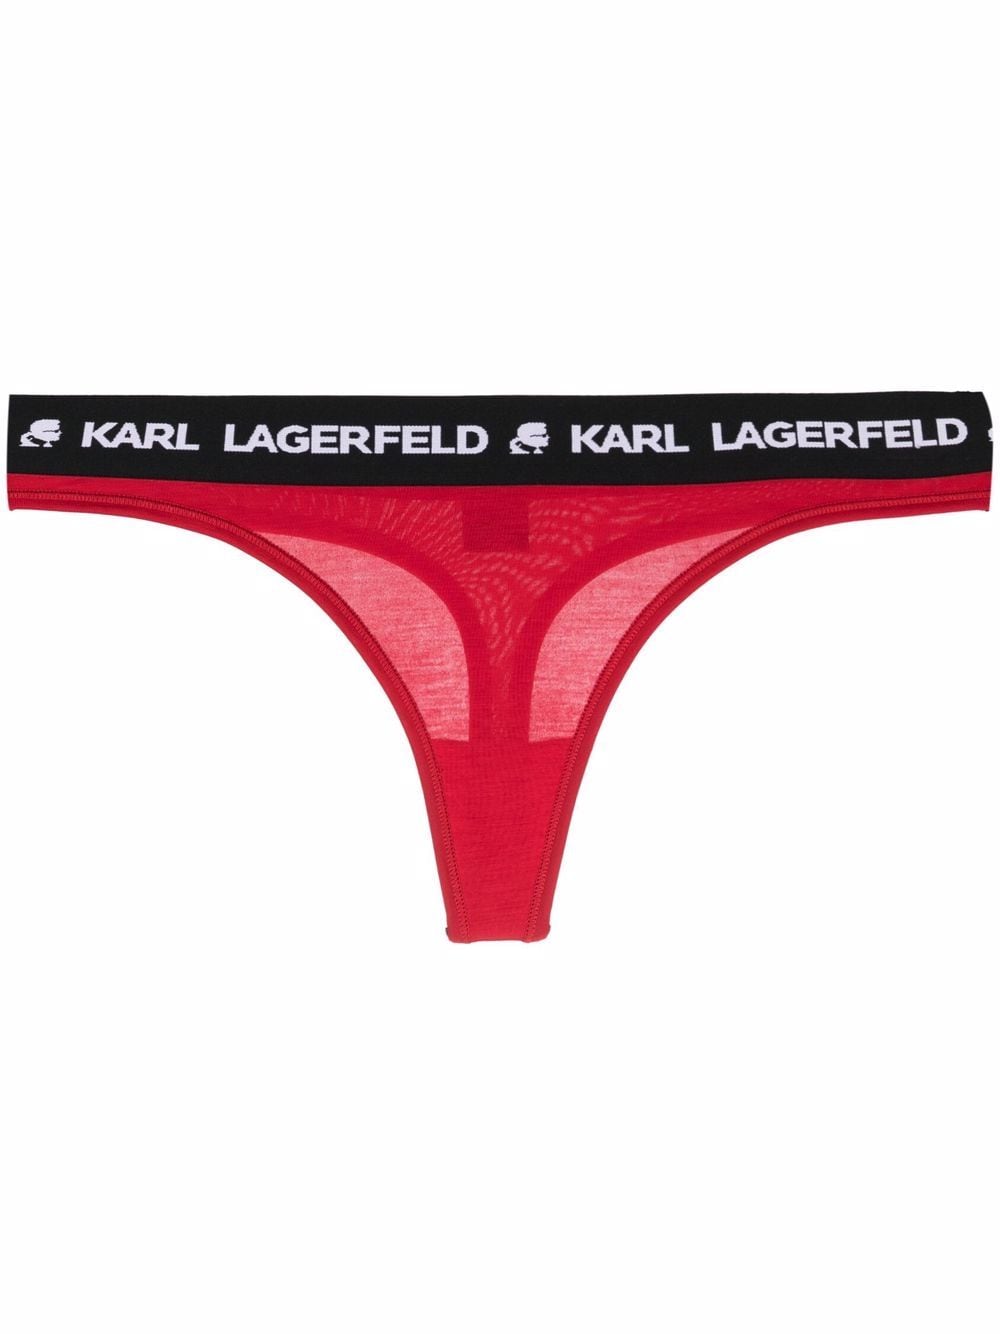 фото Karl lagerfeld трусы-стринги с вышитым логотипом